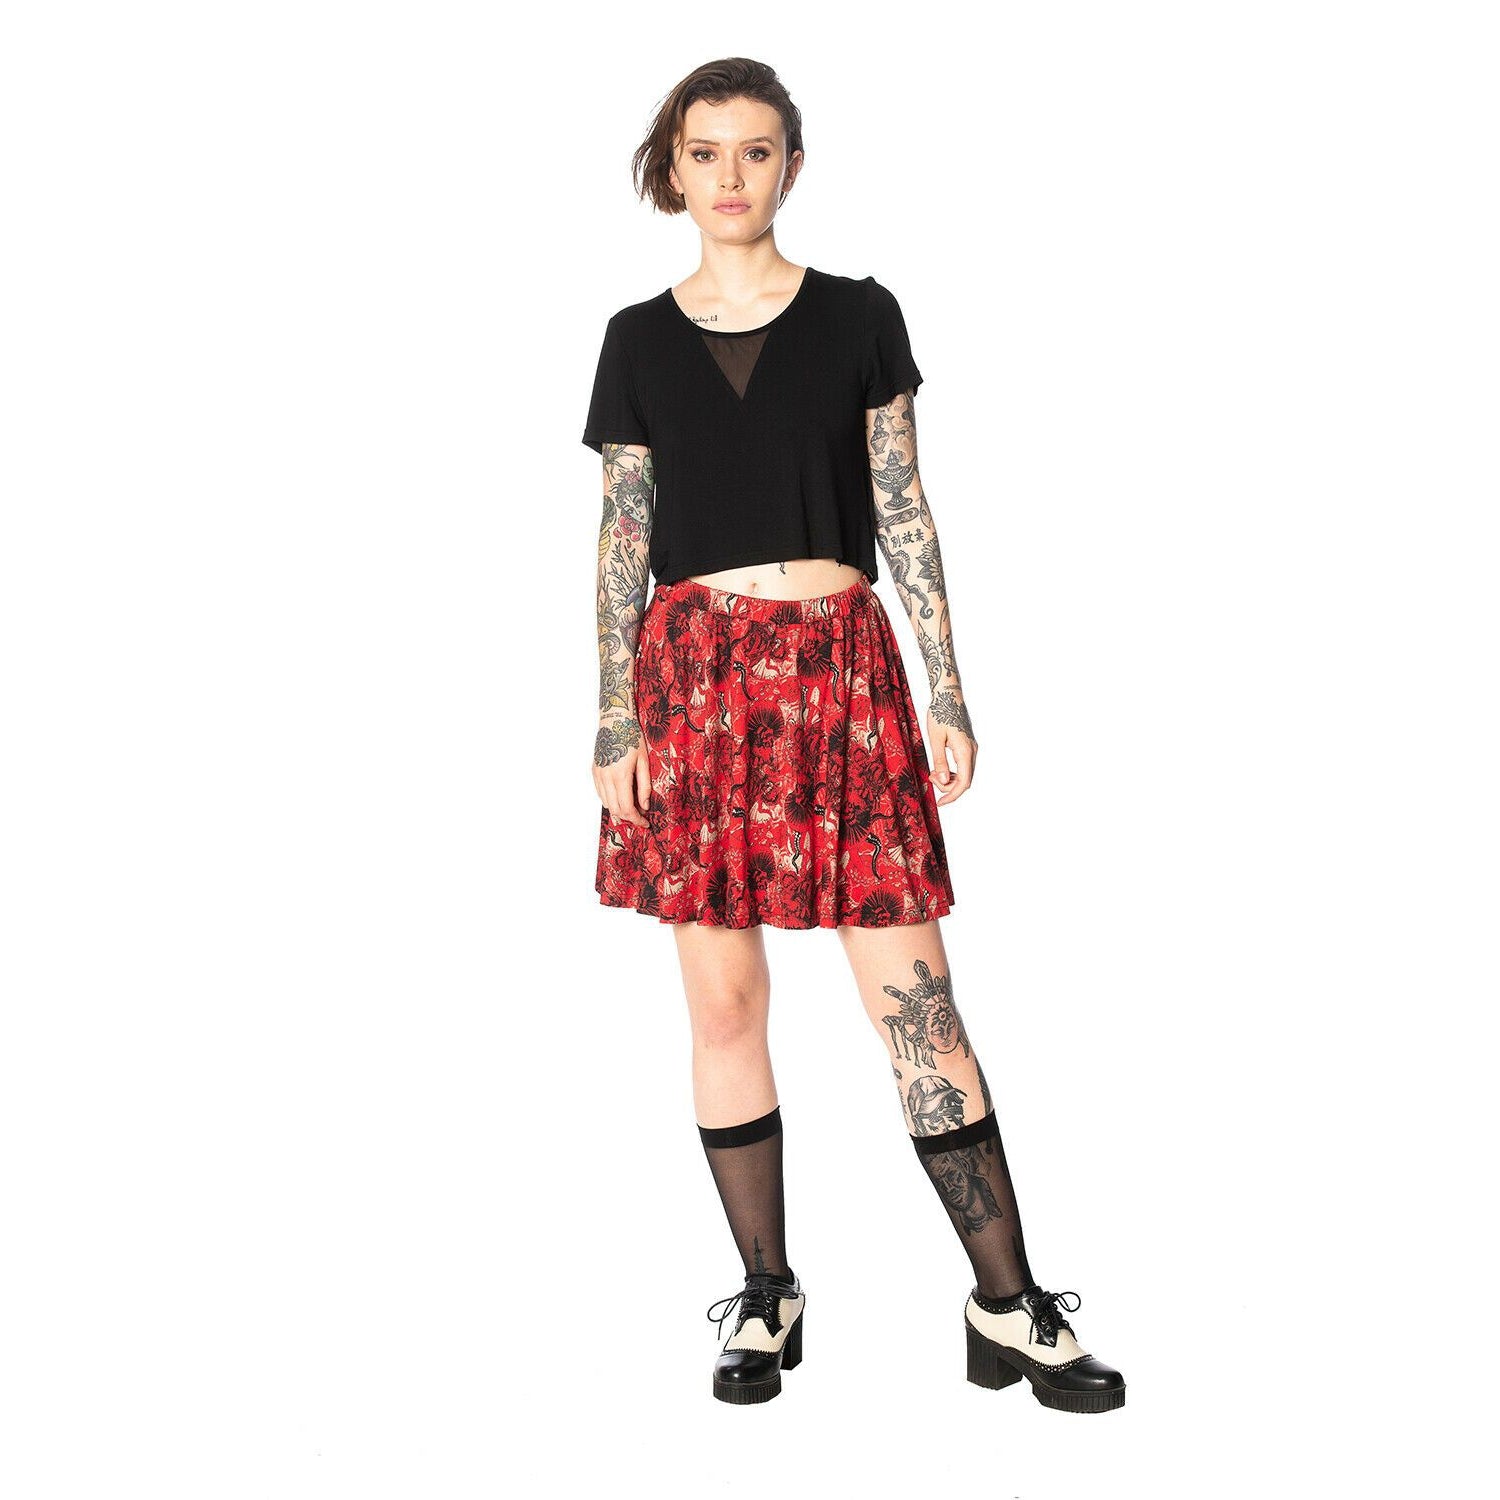 Mad Dame Womens Skater Skirt-Womens Shorts & Skirts-Scarlett Dawn